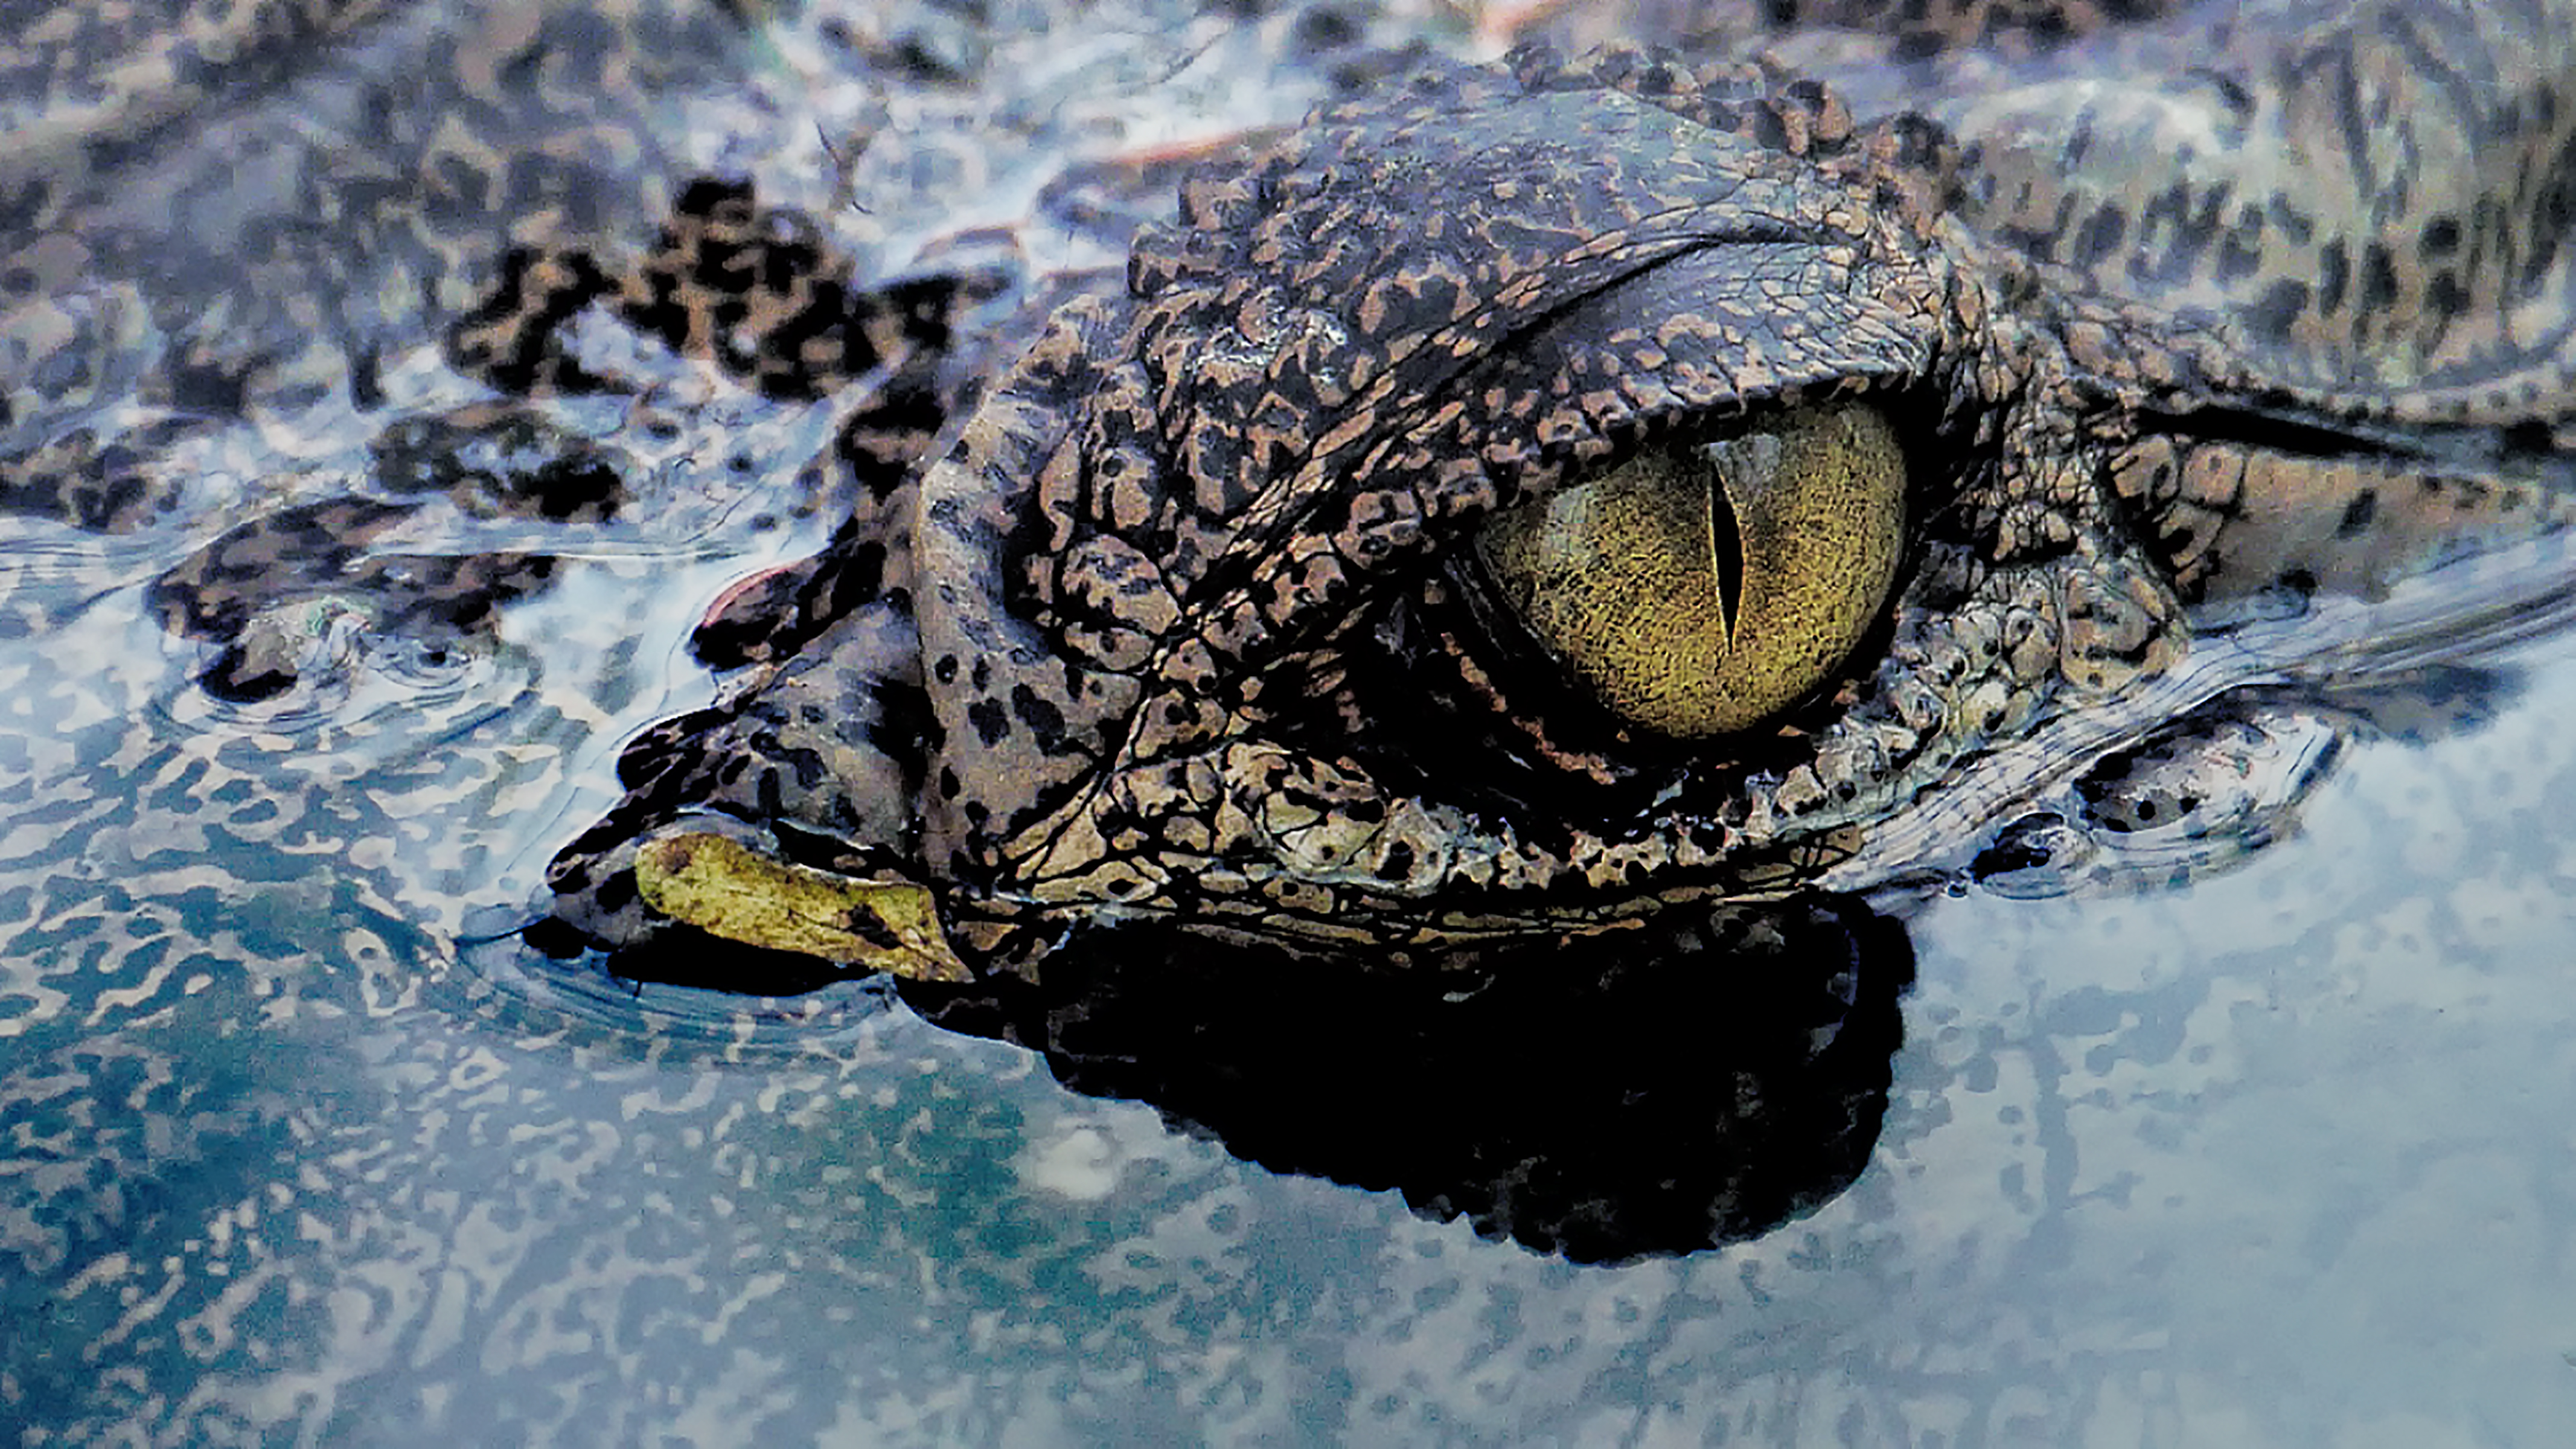 Close up crocodile eye in the water